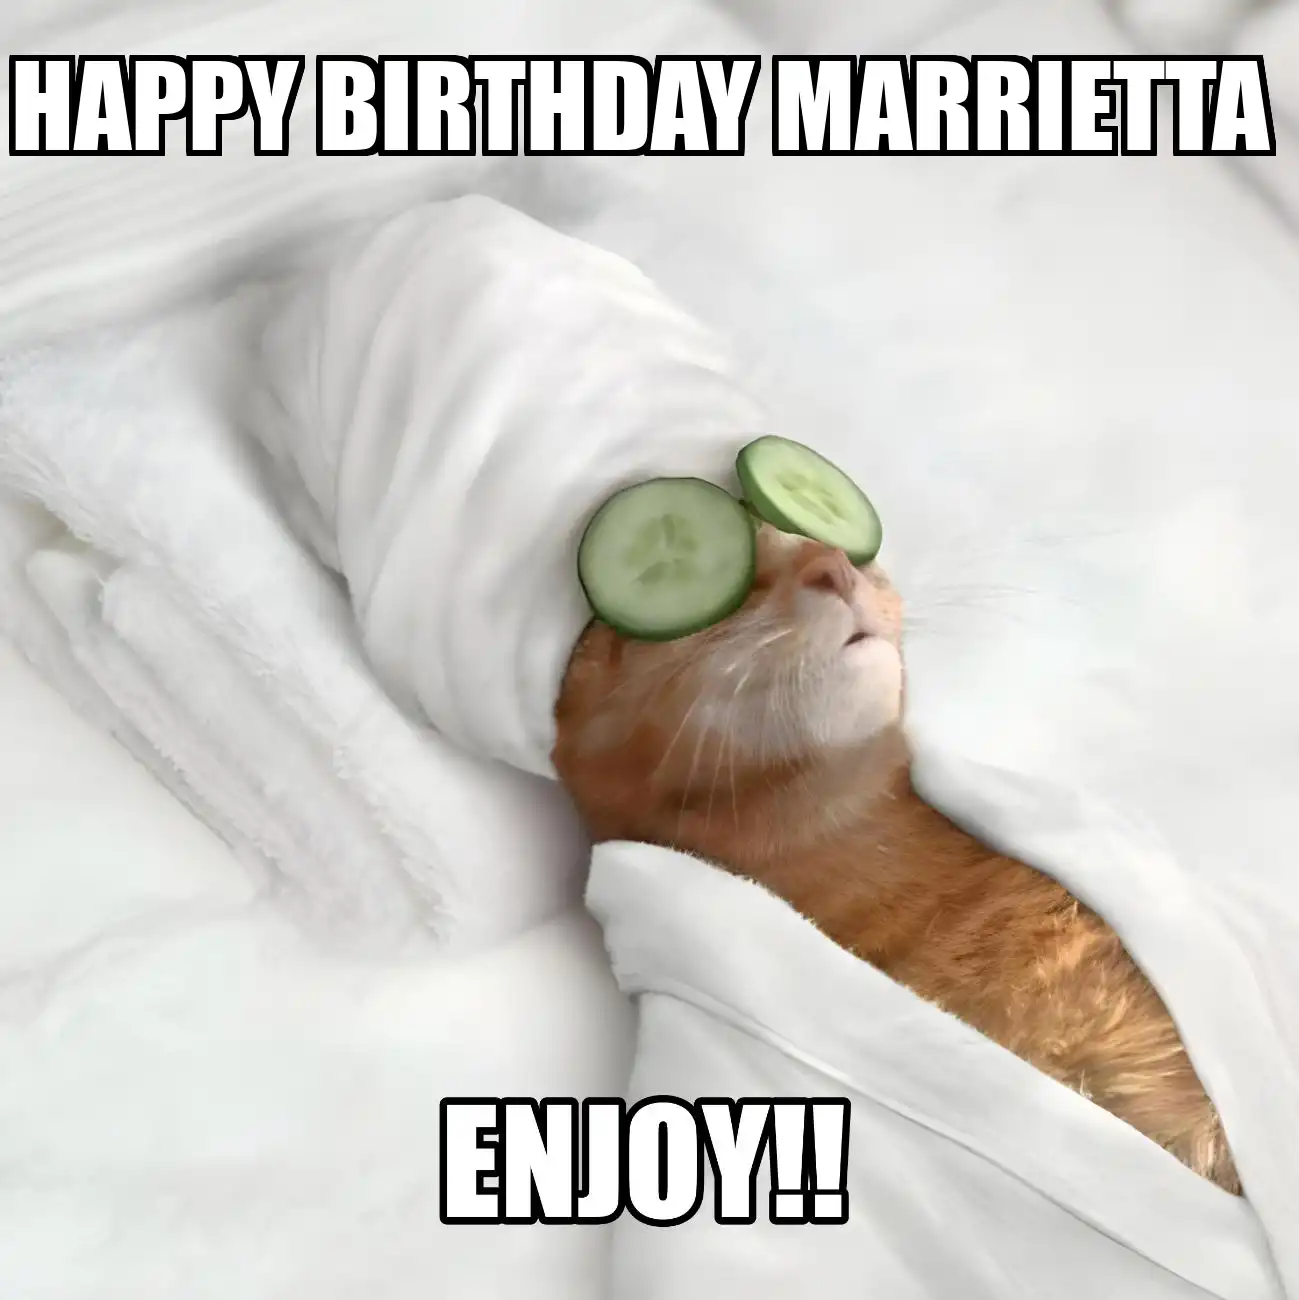 Happy Birthday Marrietta Enjoy Cat Meme